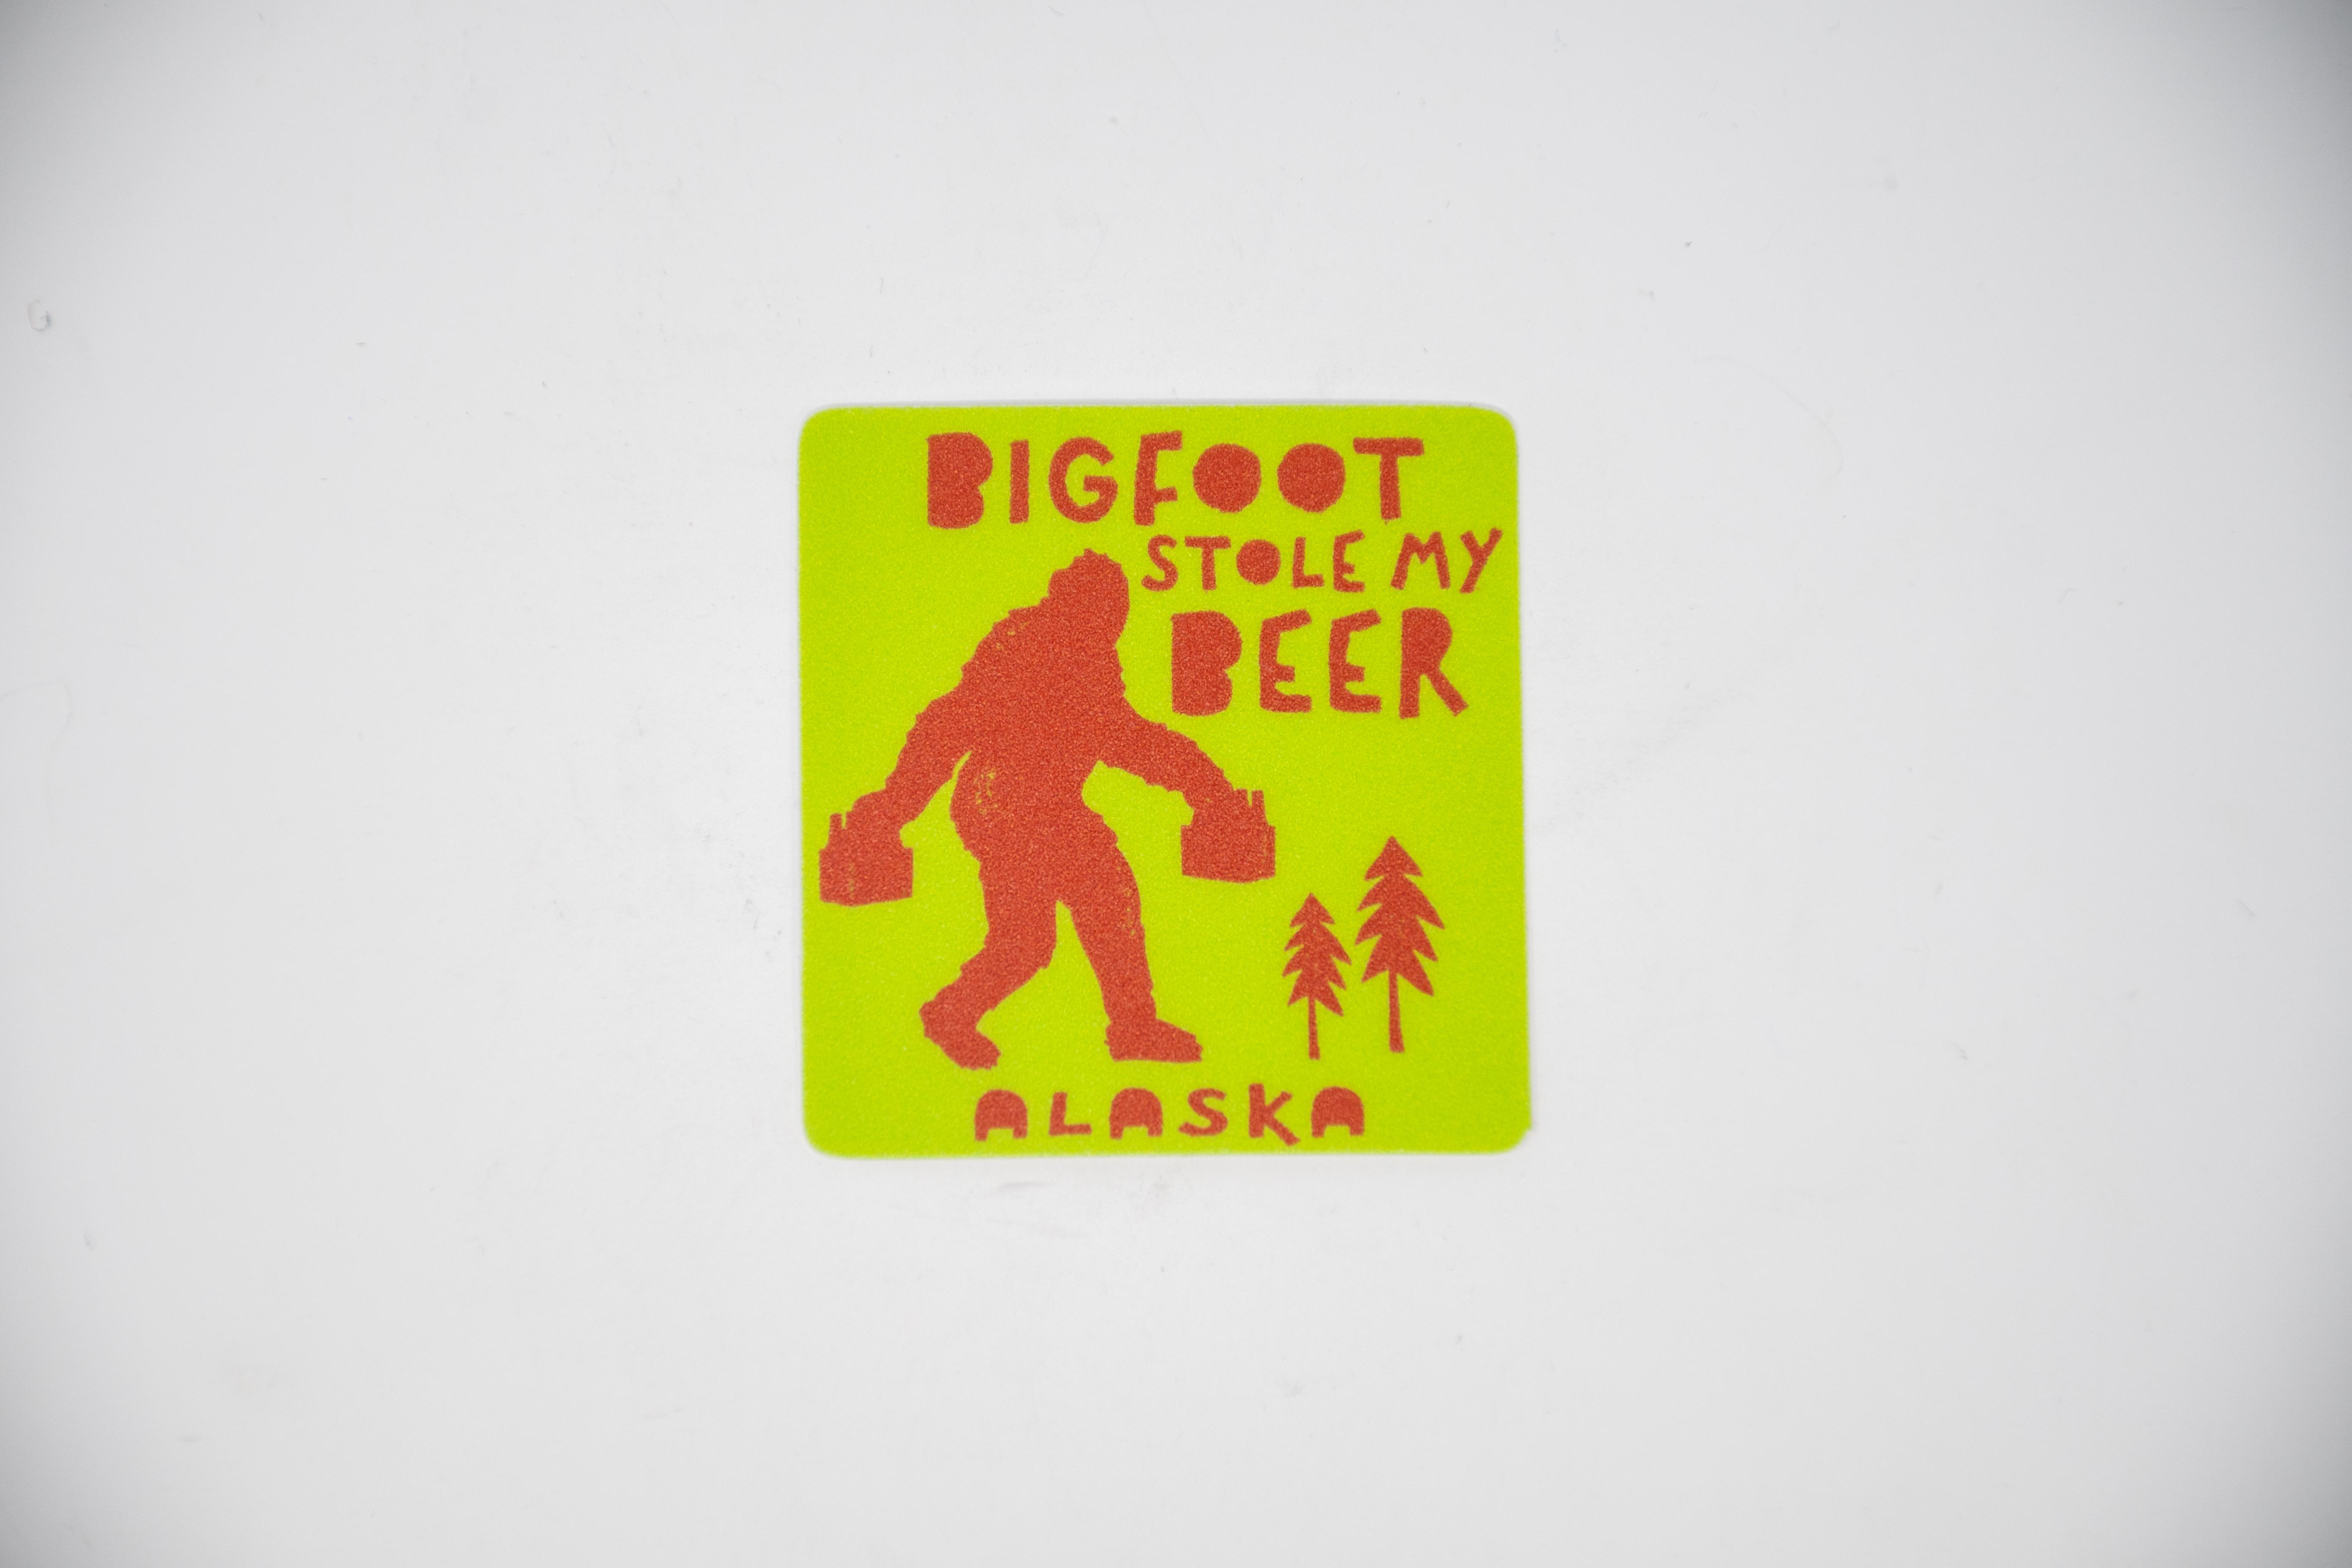  Mini Sticker - Stolen- Bigfoot